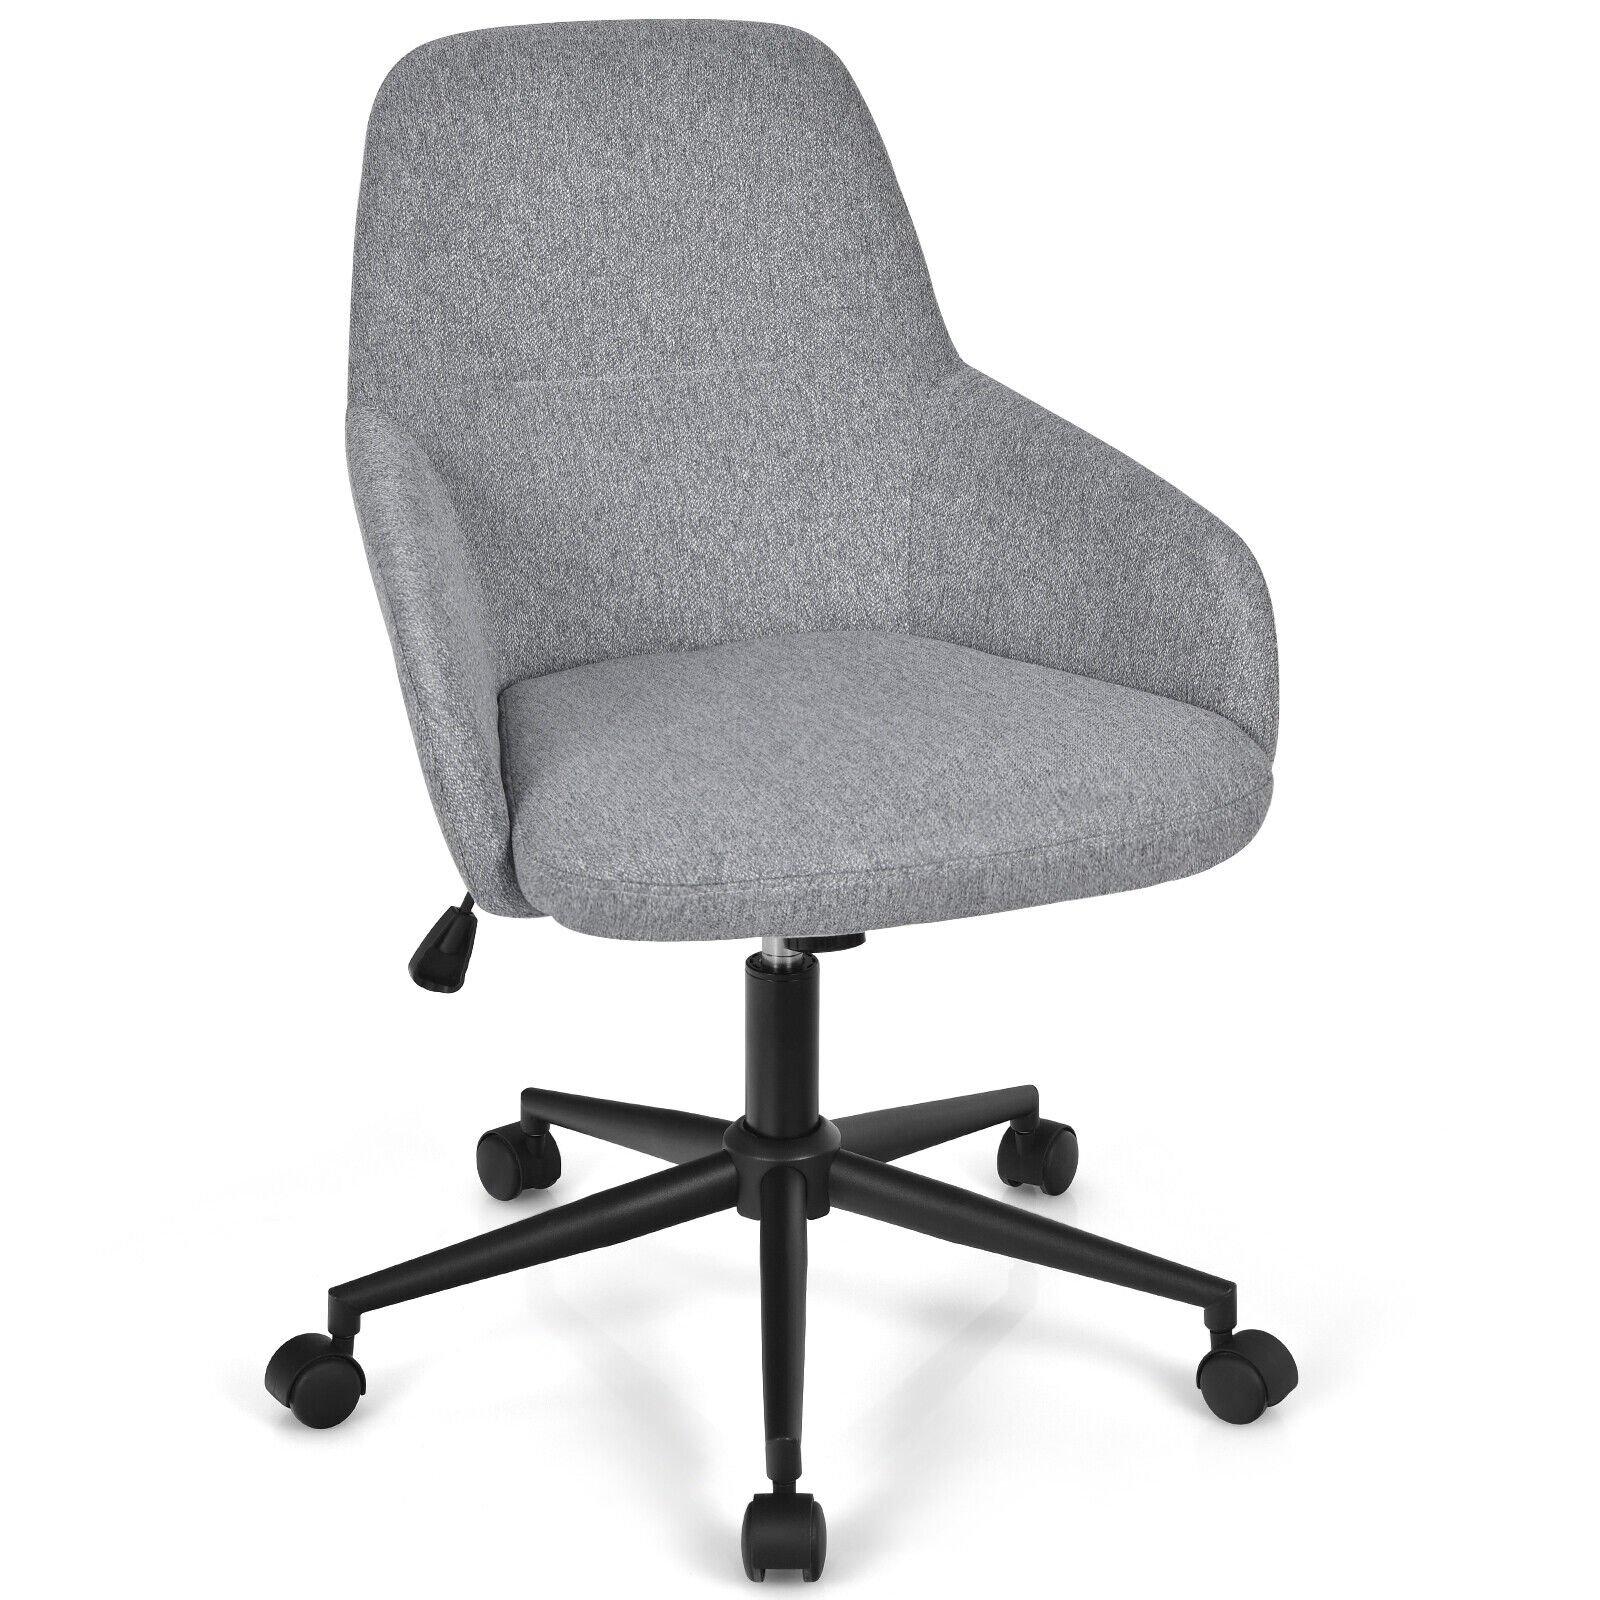 Upholstered Linen Fabric Leisure Chair Ergonomic Desk Chair